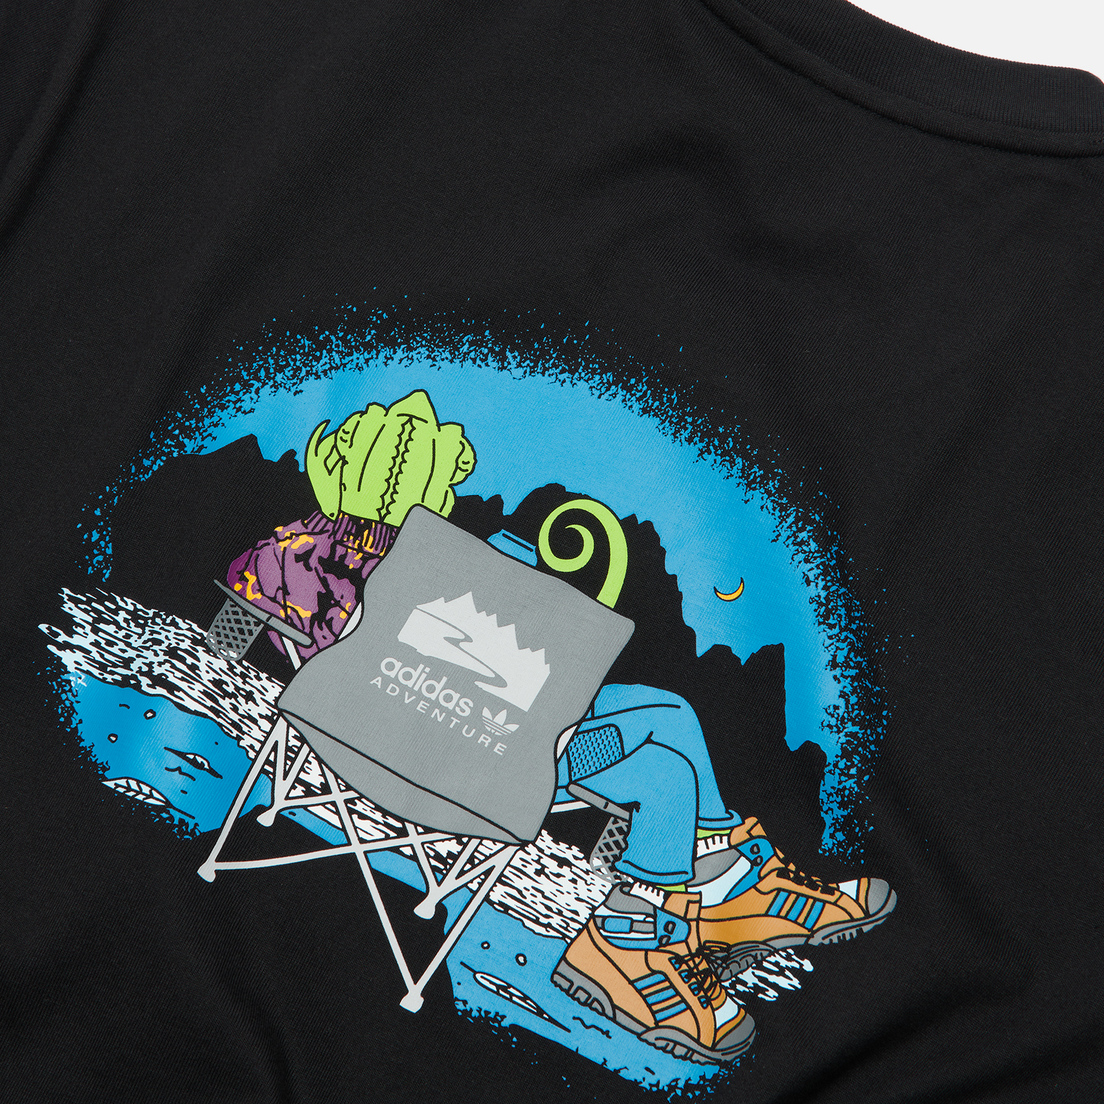 adidas Originals Мужская футболка Adventure Chameleon